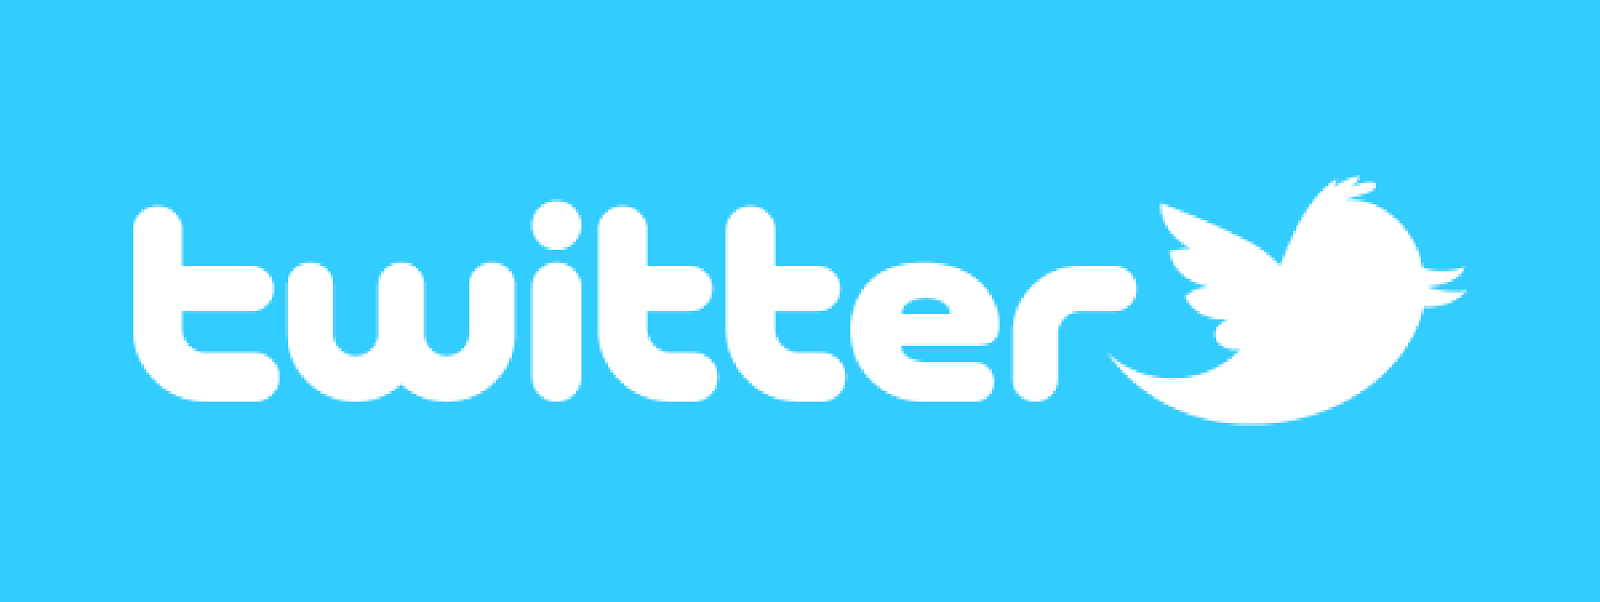 Twitter увольняет персонал